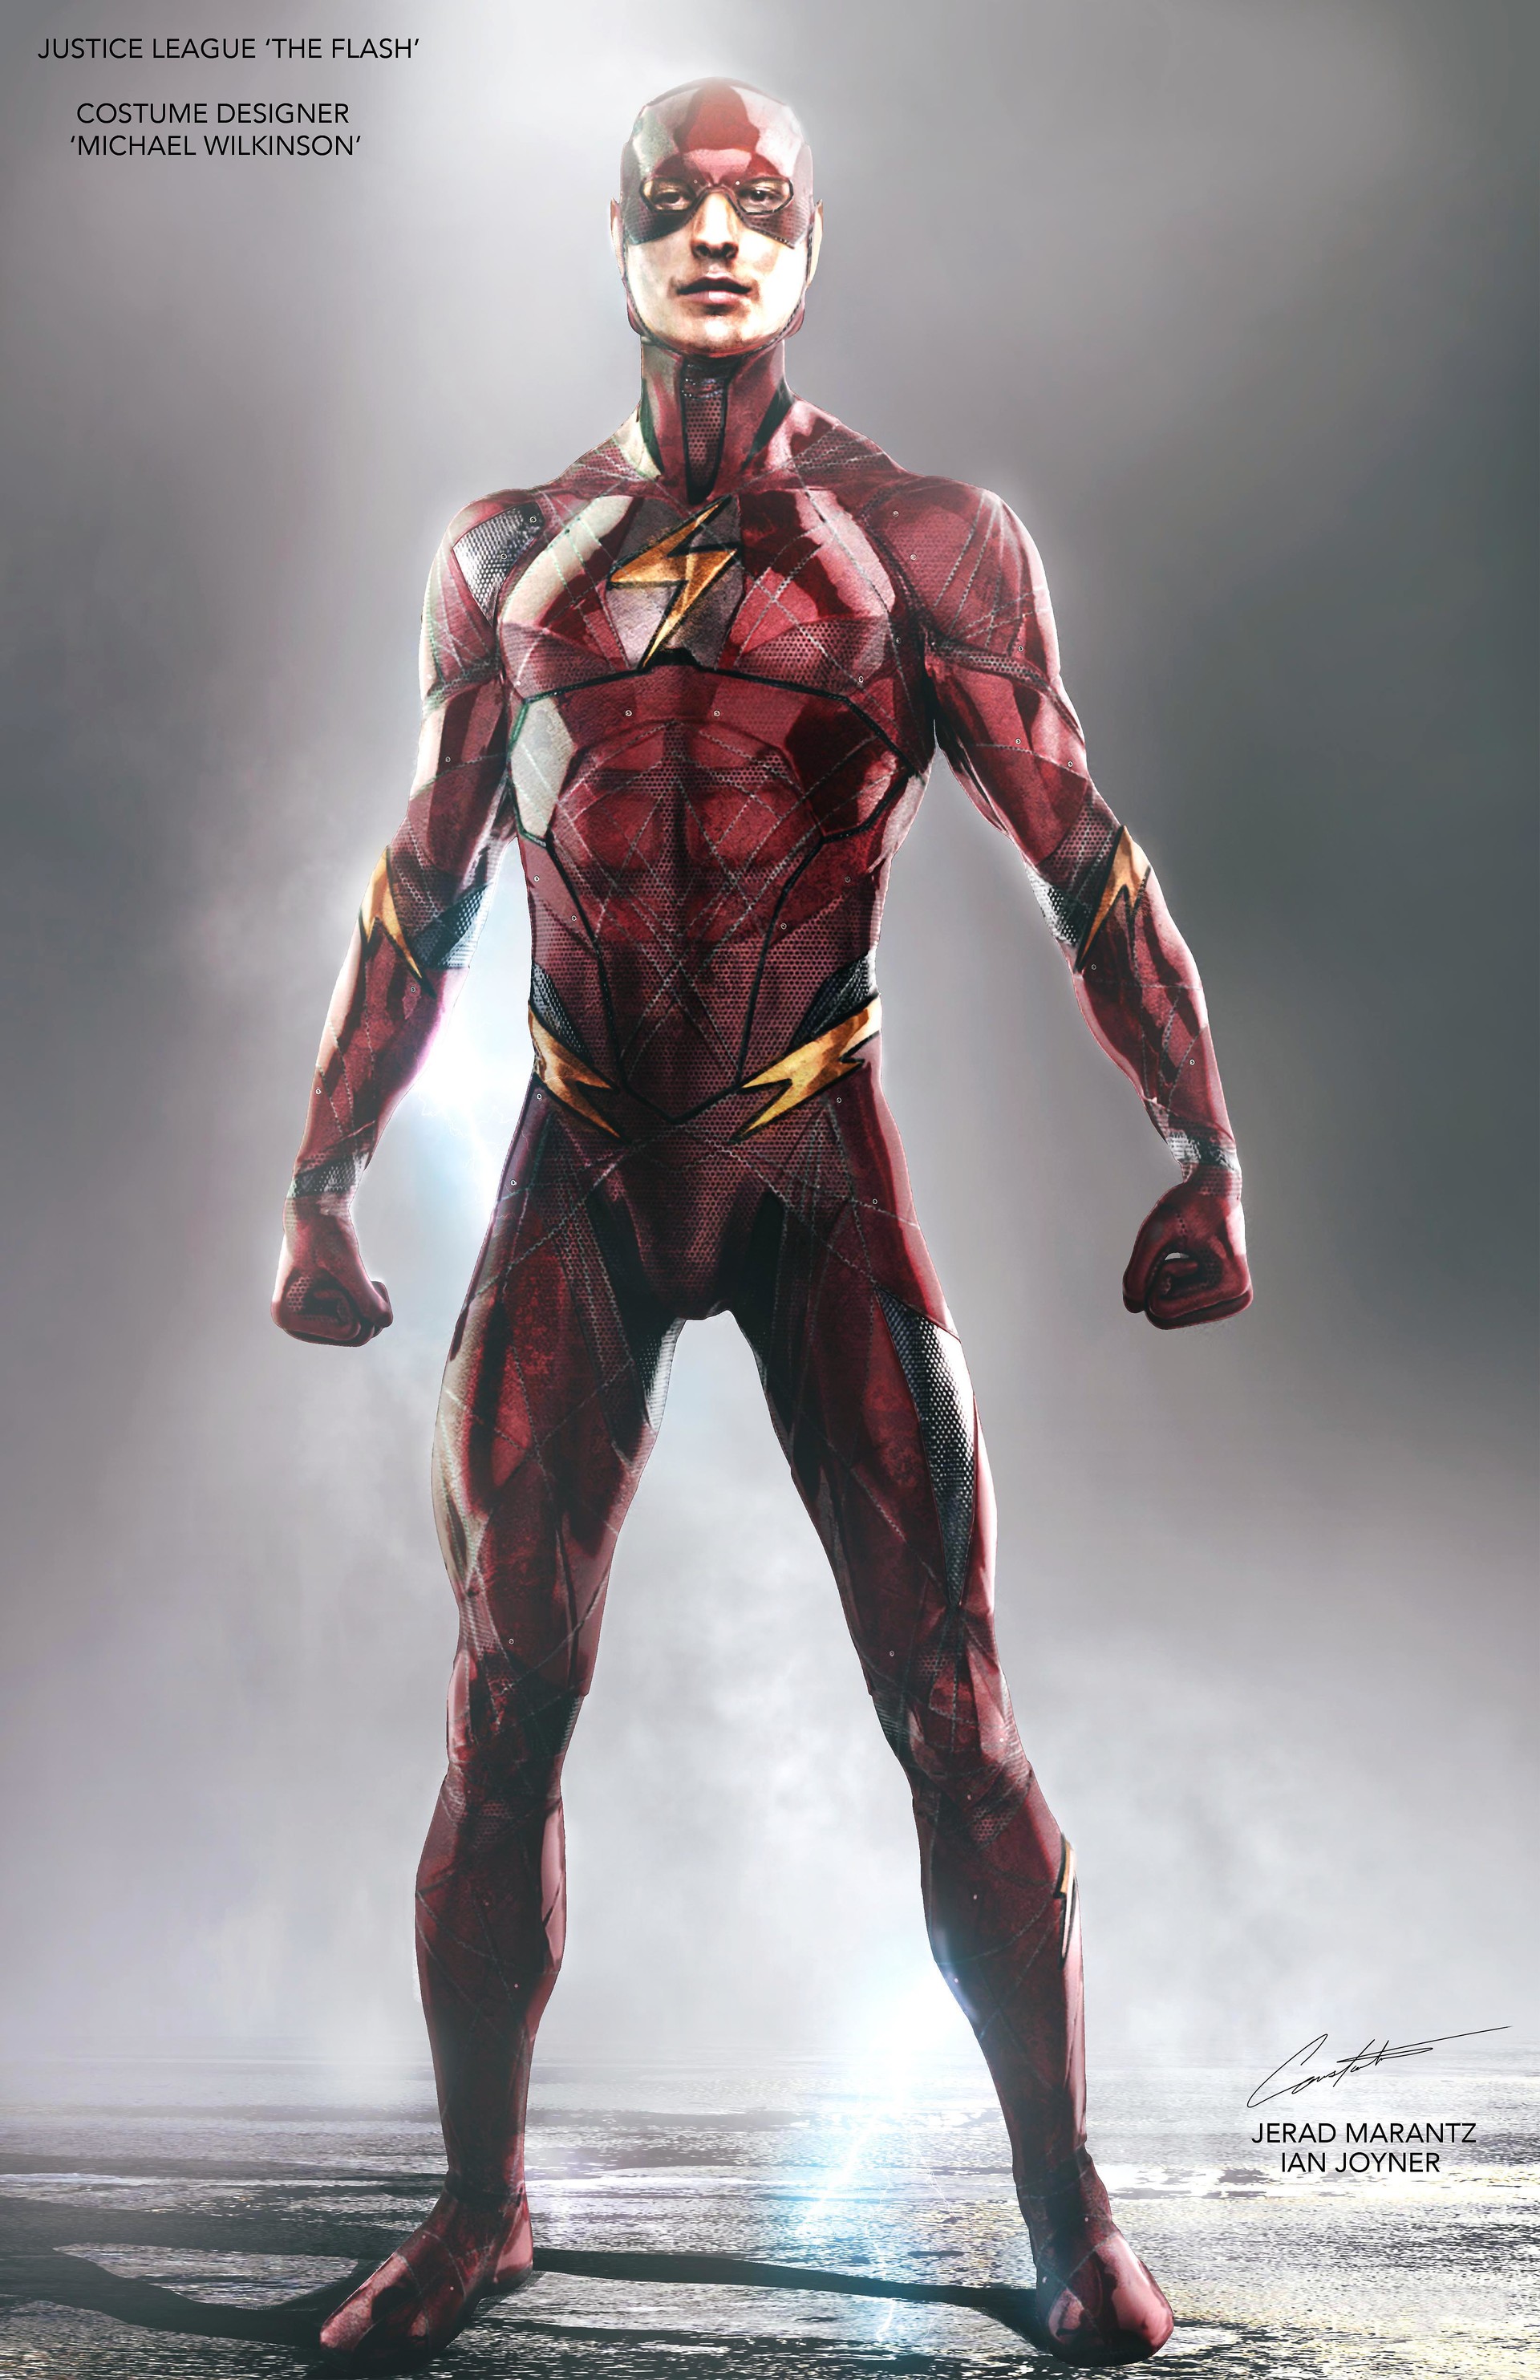 ArtStation - Justice League 'The Flash" Costume Concept 